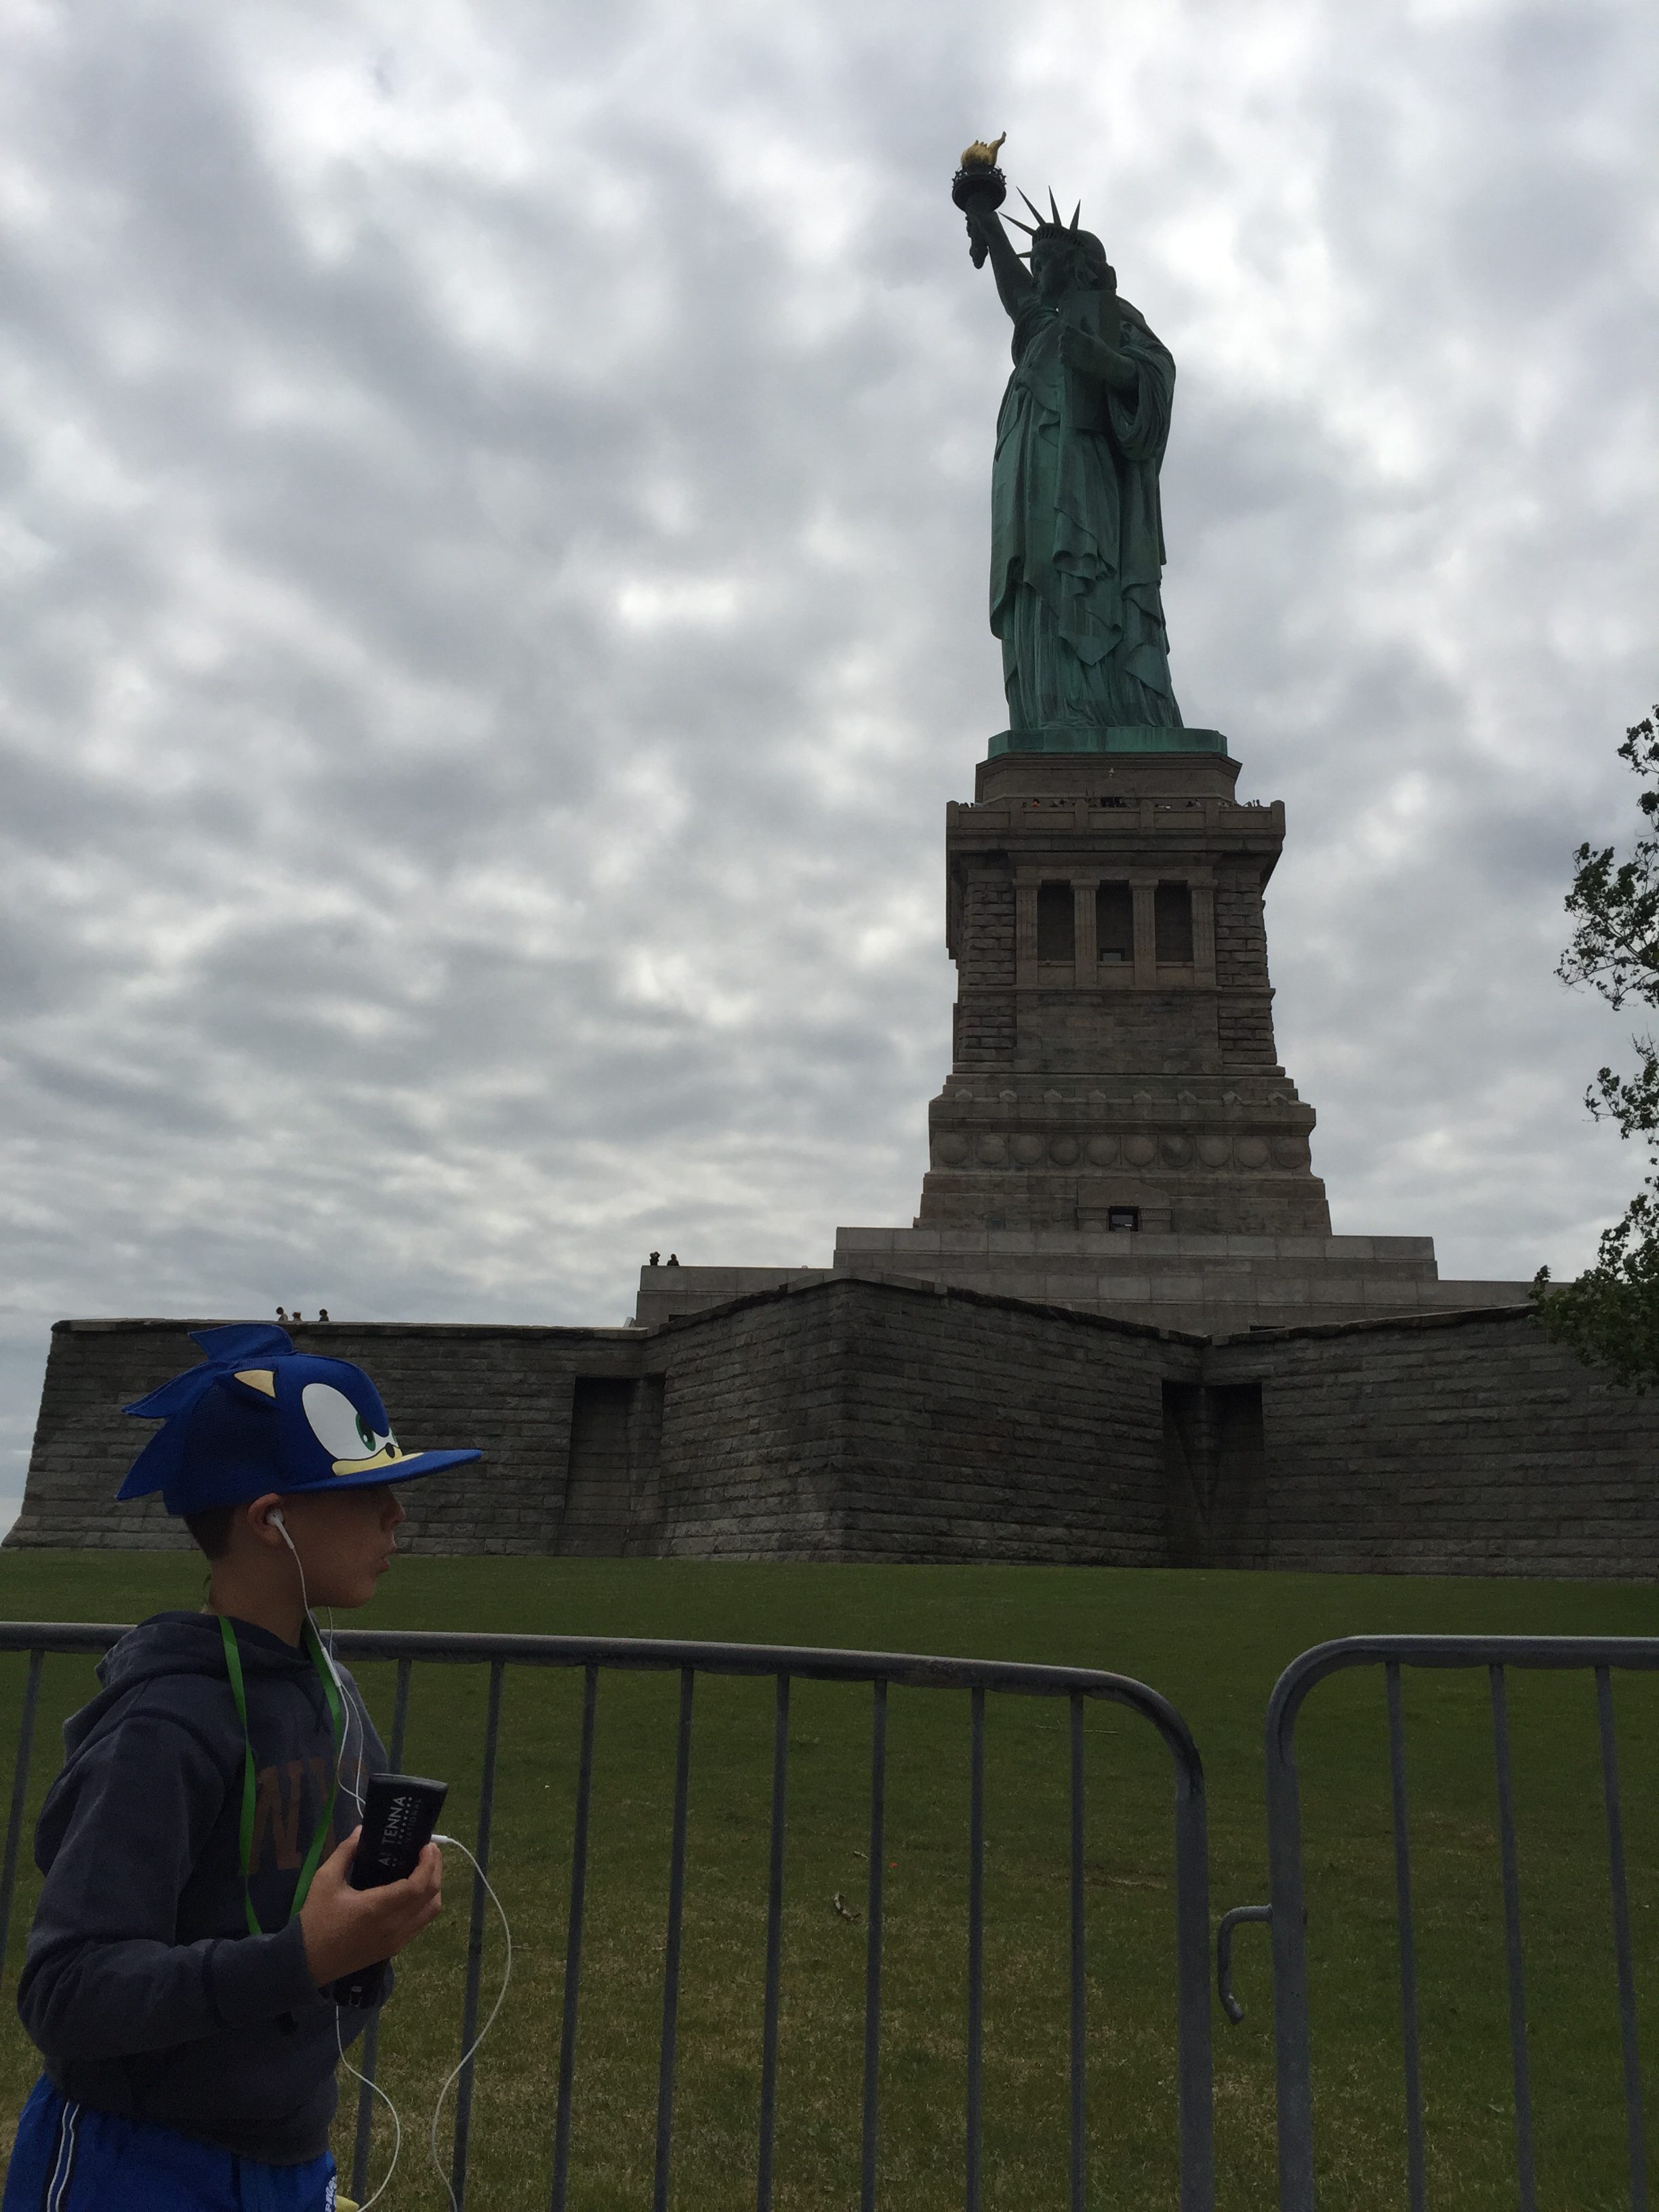 Enjoy a walk around Lady Liberty